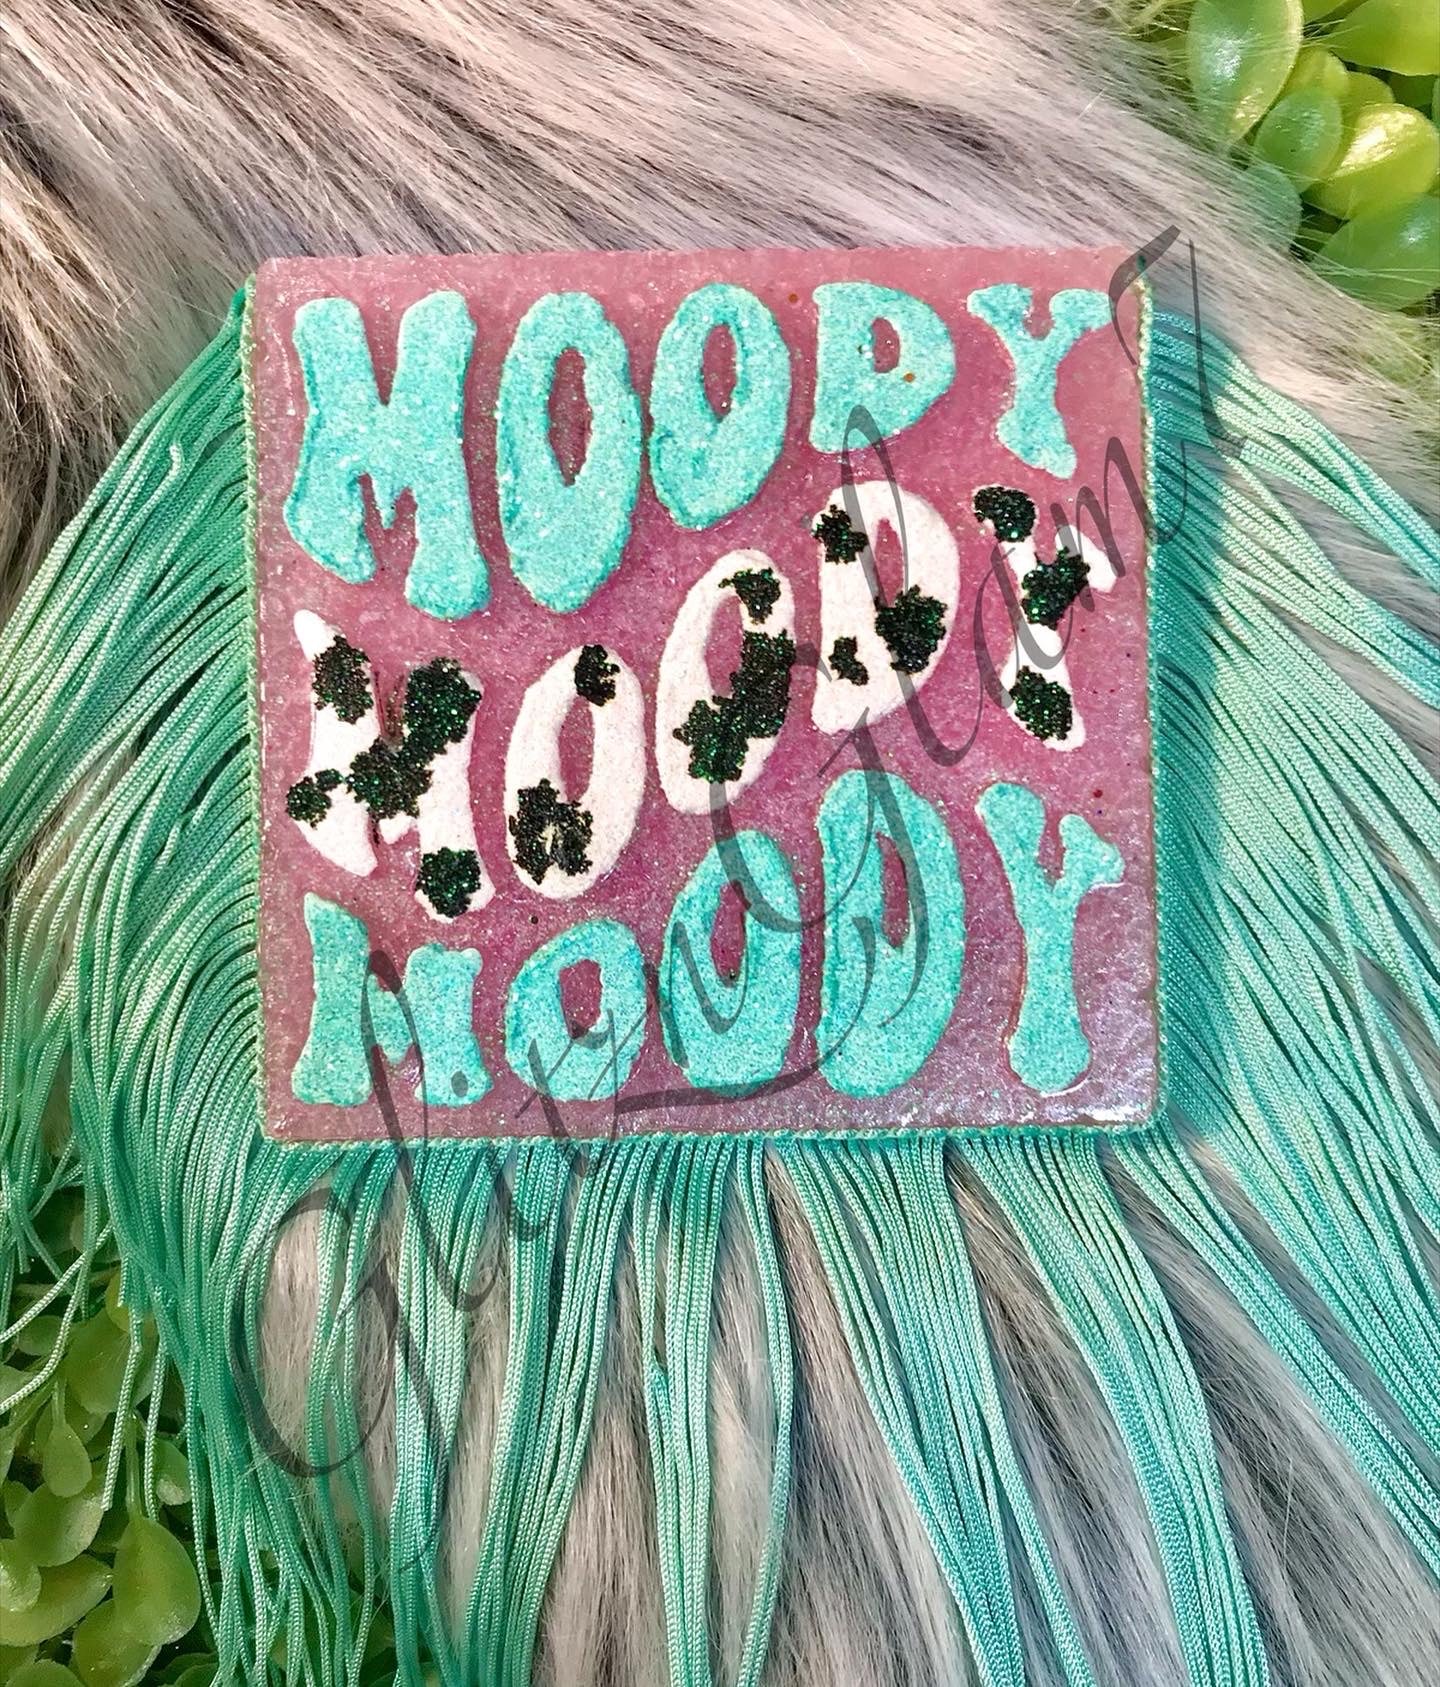 Moody Moody Moody Freshie Silicone Mold